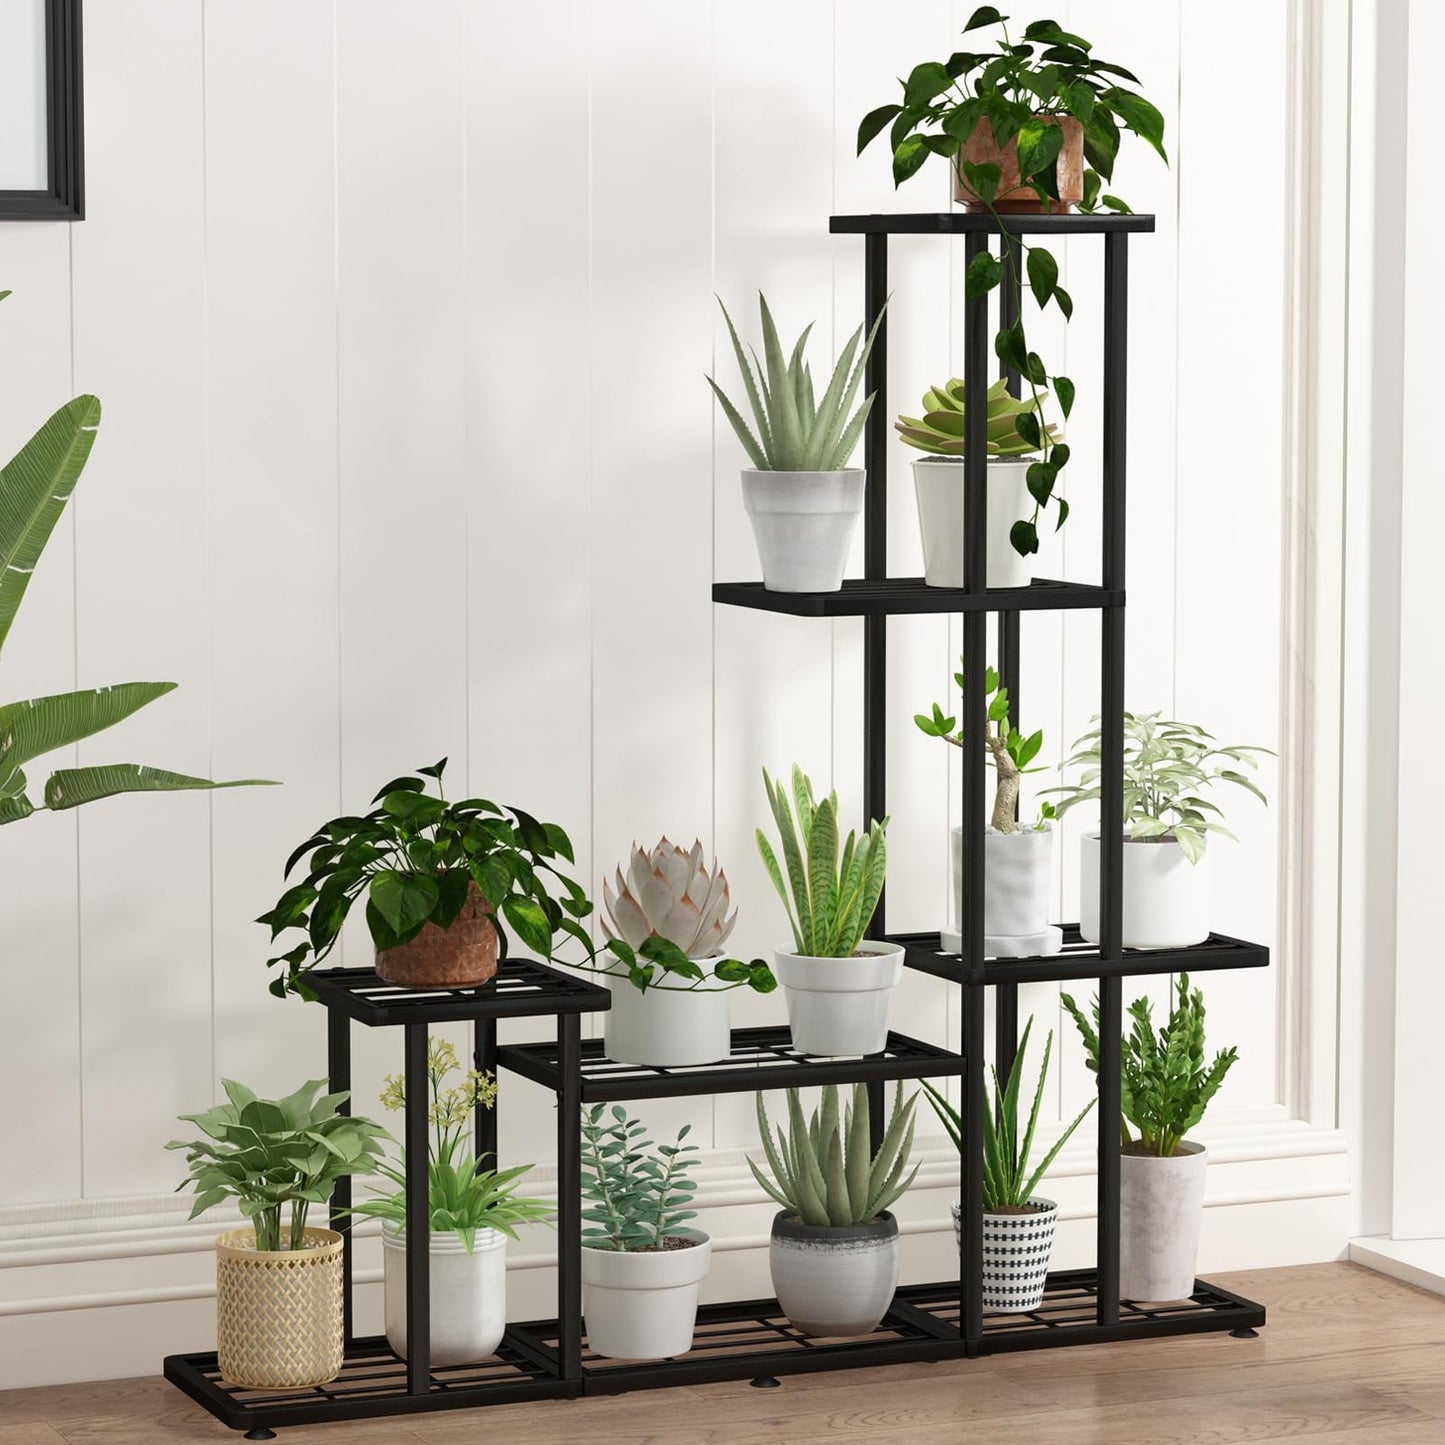 Linzinar Plant Stand 5 Tier Multiple Flower Pot Holder Shelves Indoor Outdoor Planter Rack